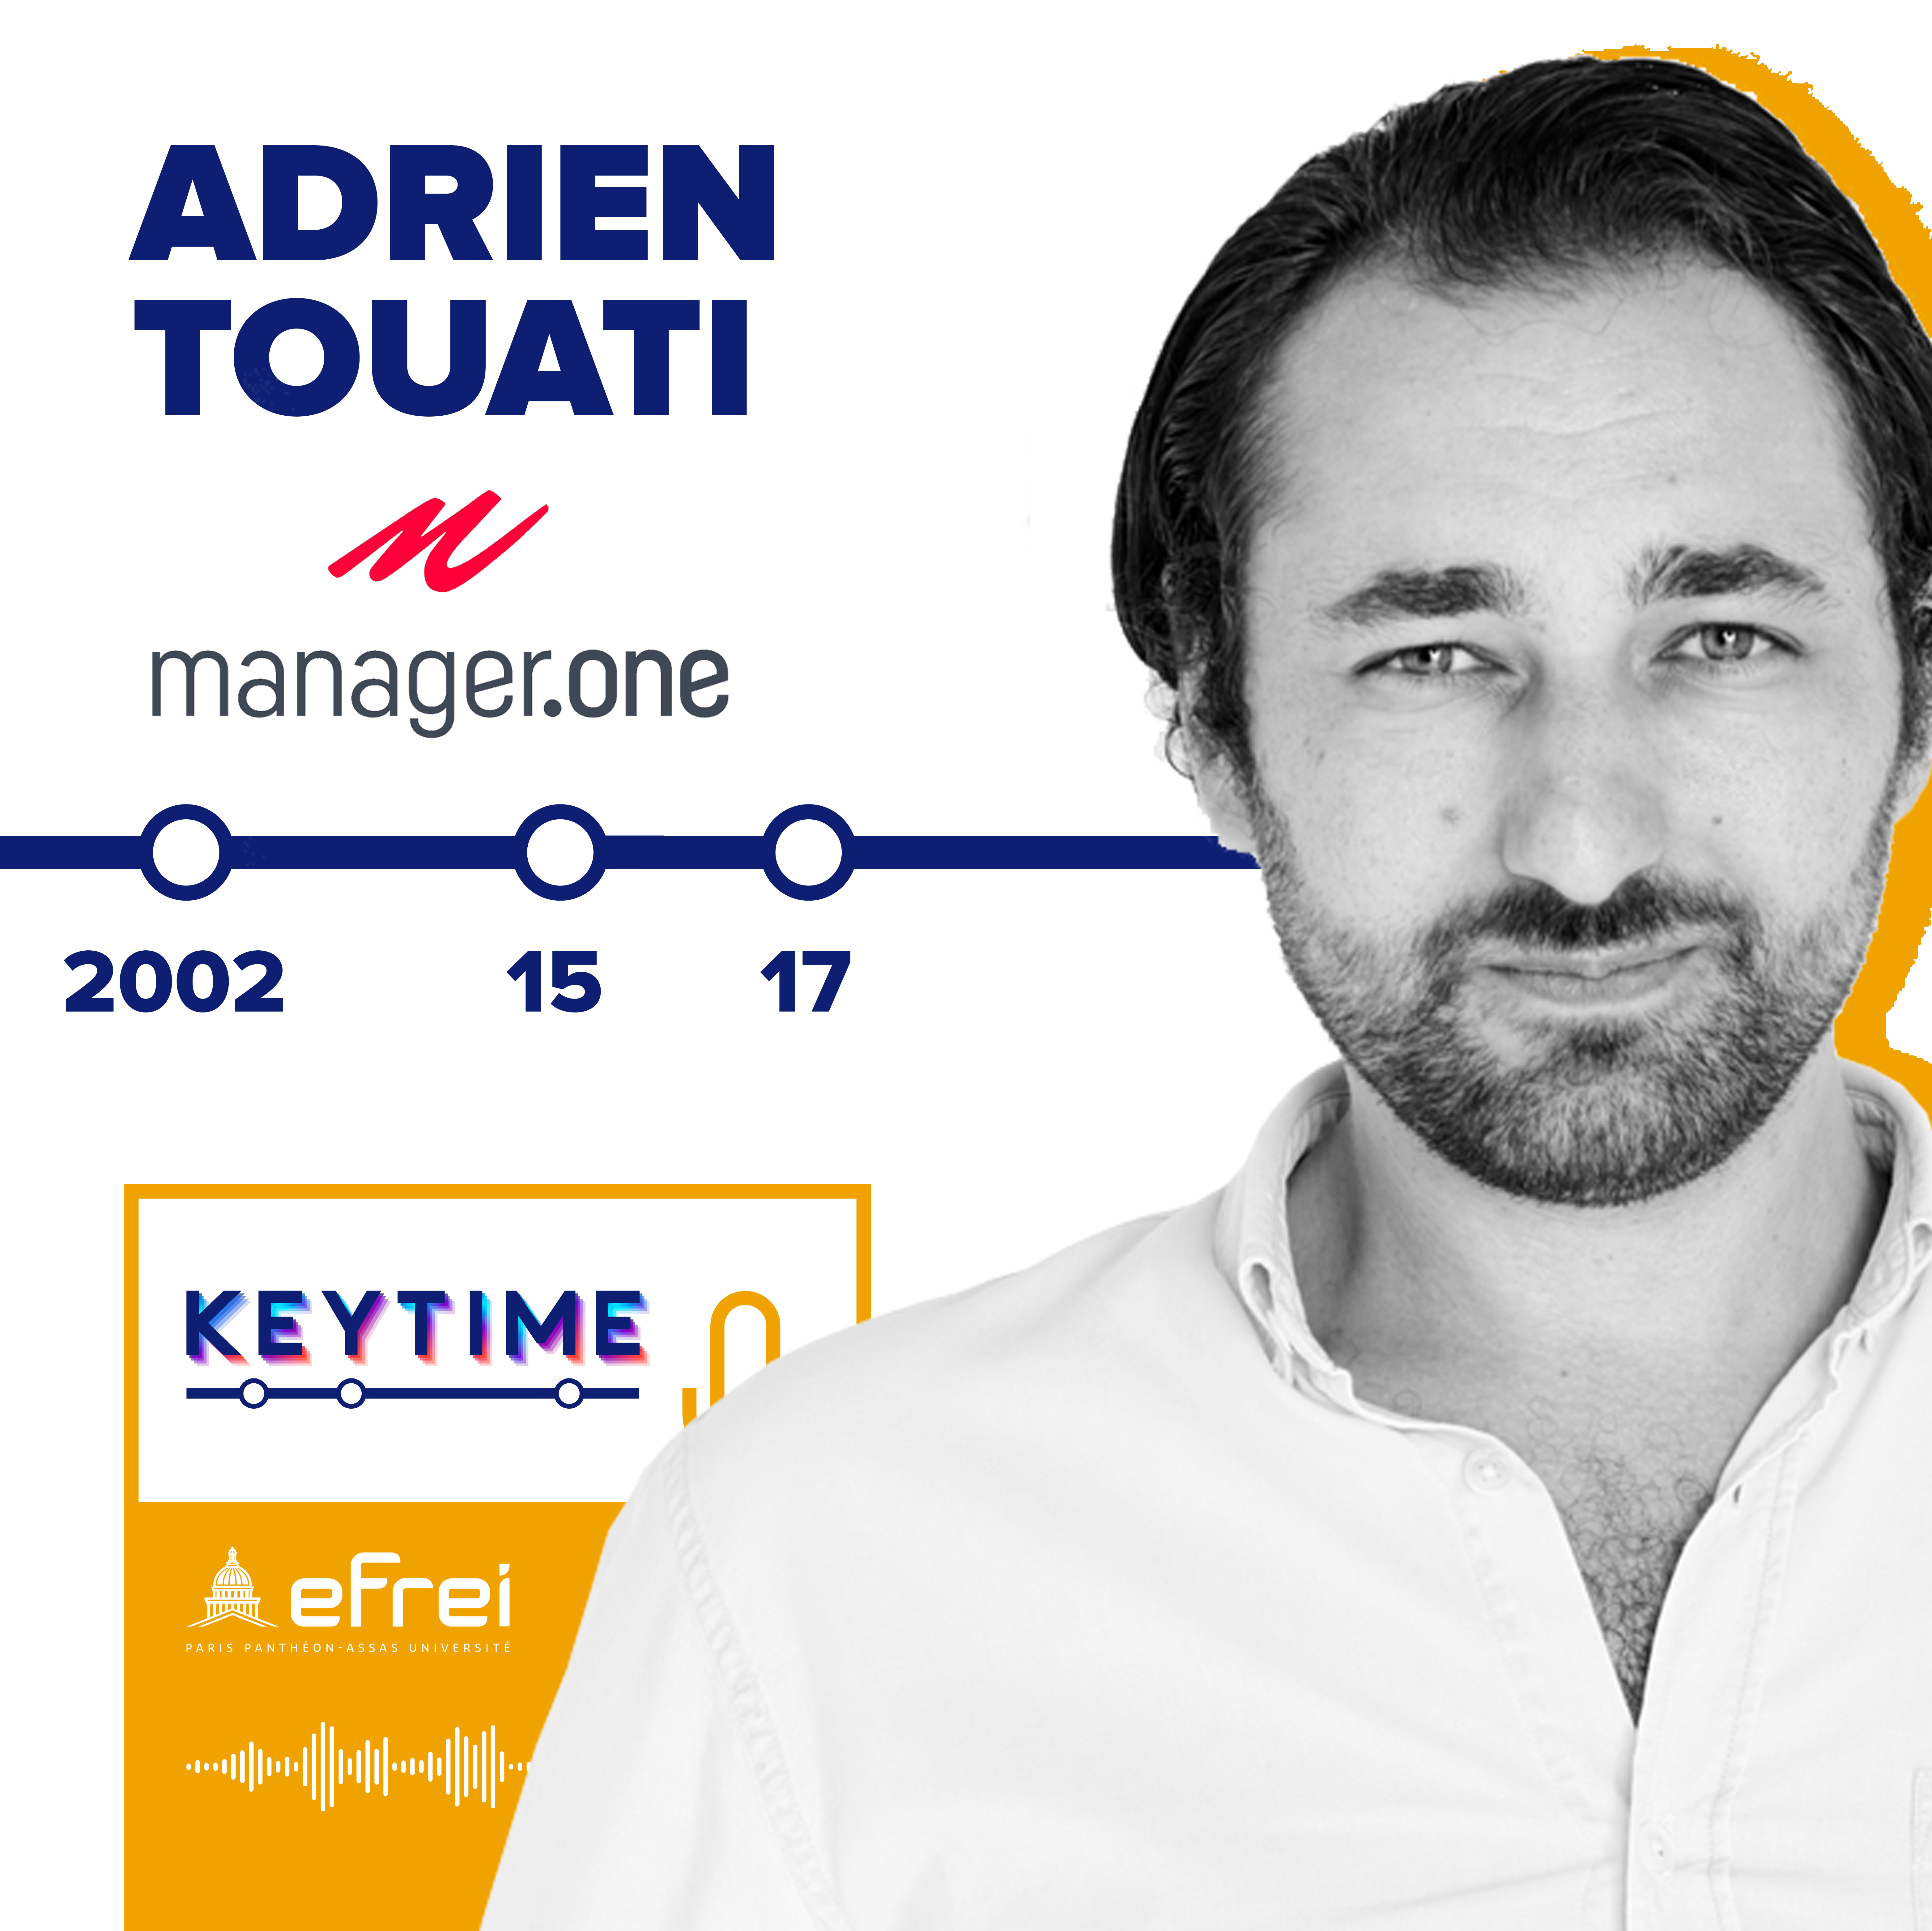 Keytime Adrien Touati manager.one